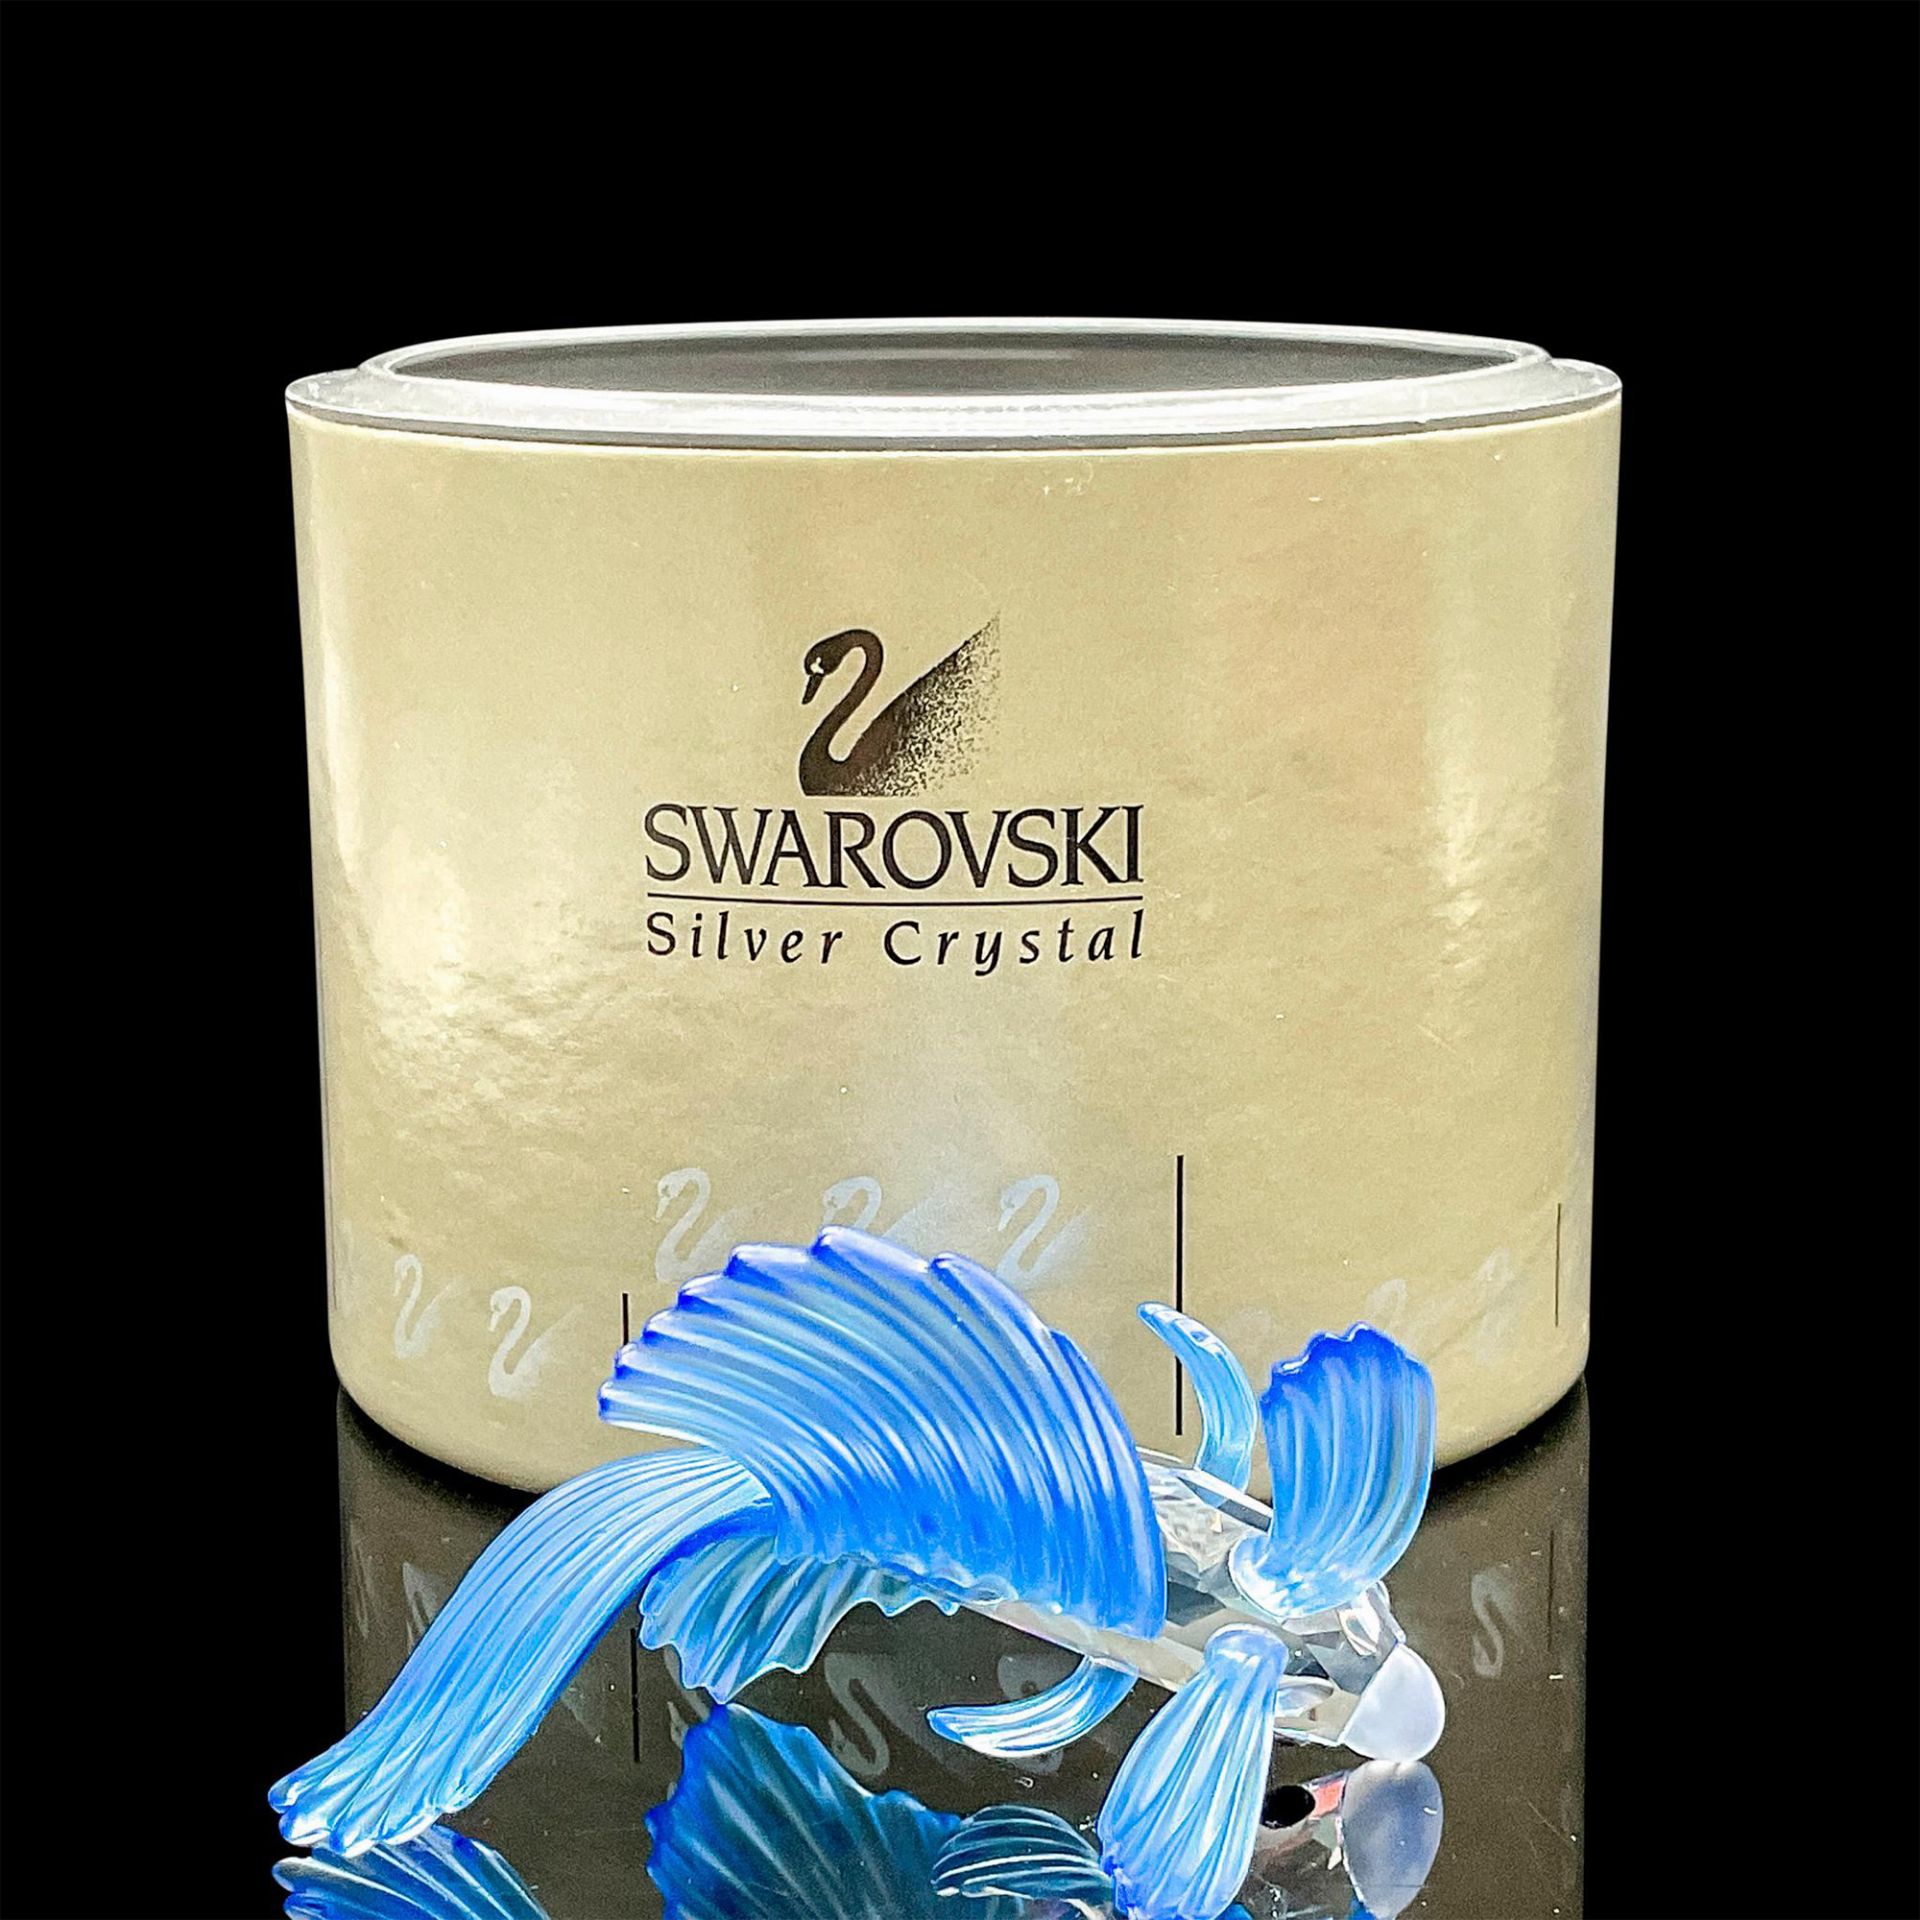 Swarovski Silver Crystal Figurine Siamese Fighting Fish Blue - Image 3 of 3